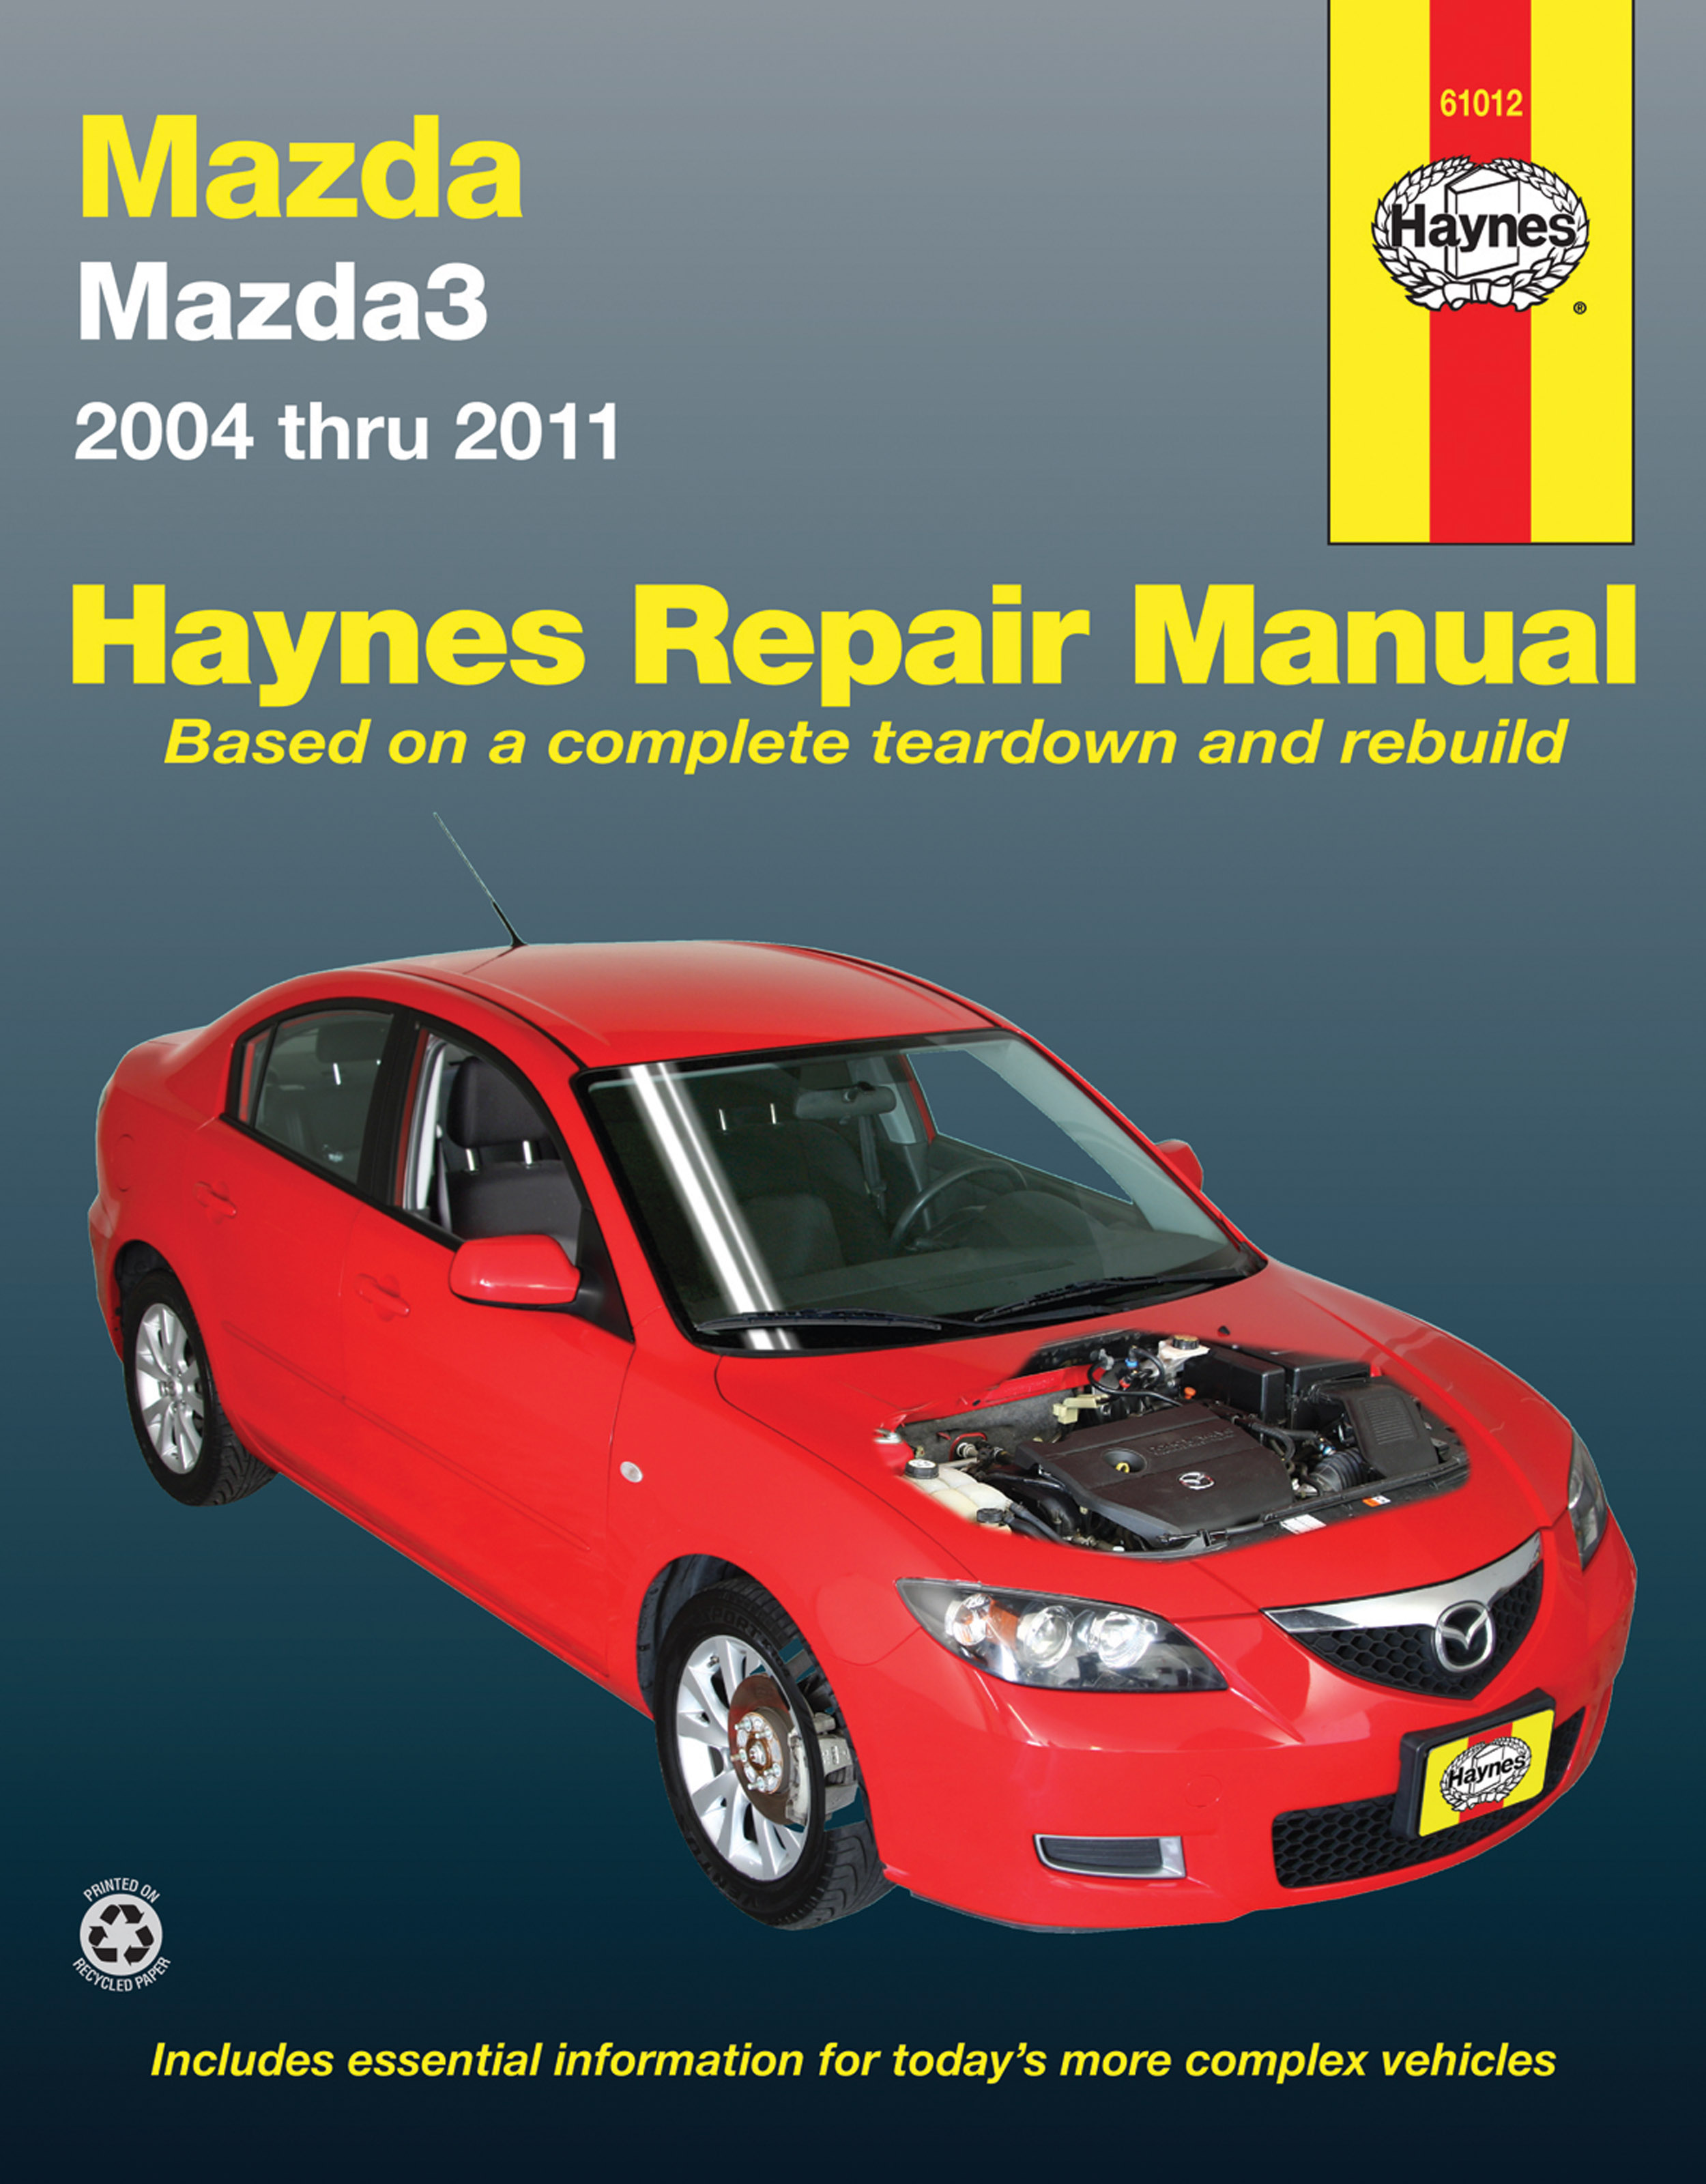 OFFICIAL WORKSHOP Manual Service Repair Mazda 3 Speed 1 2003-2009 